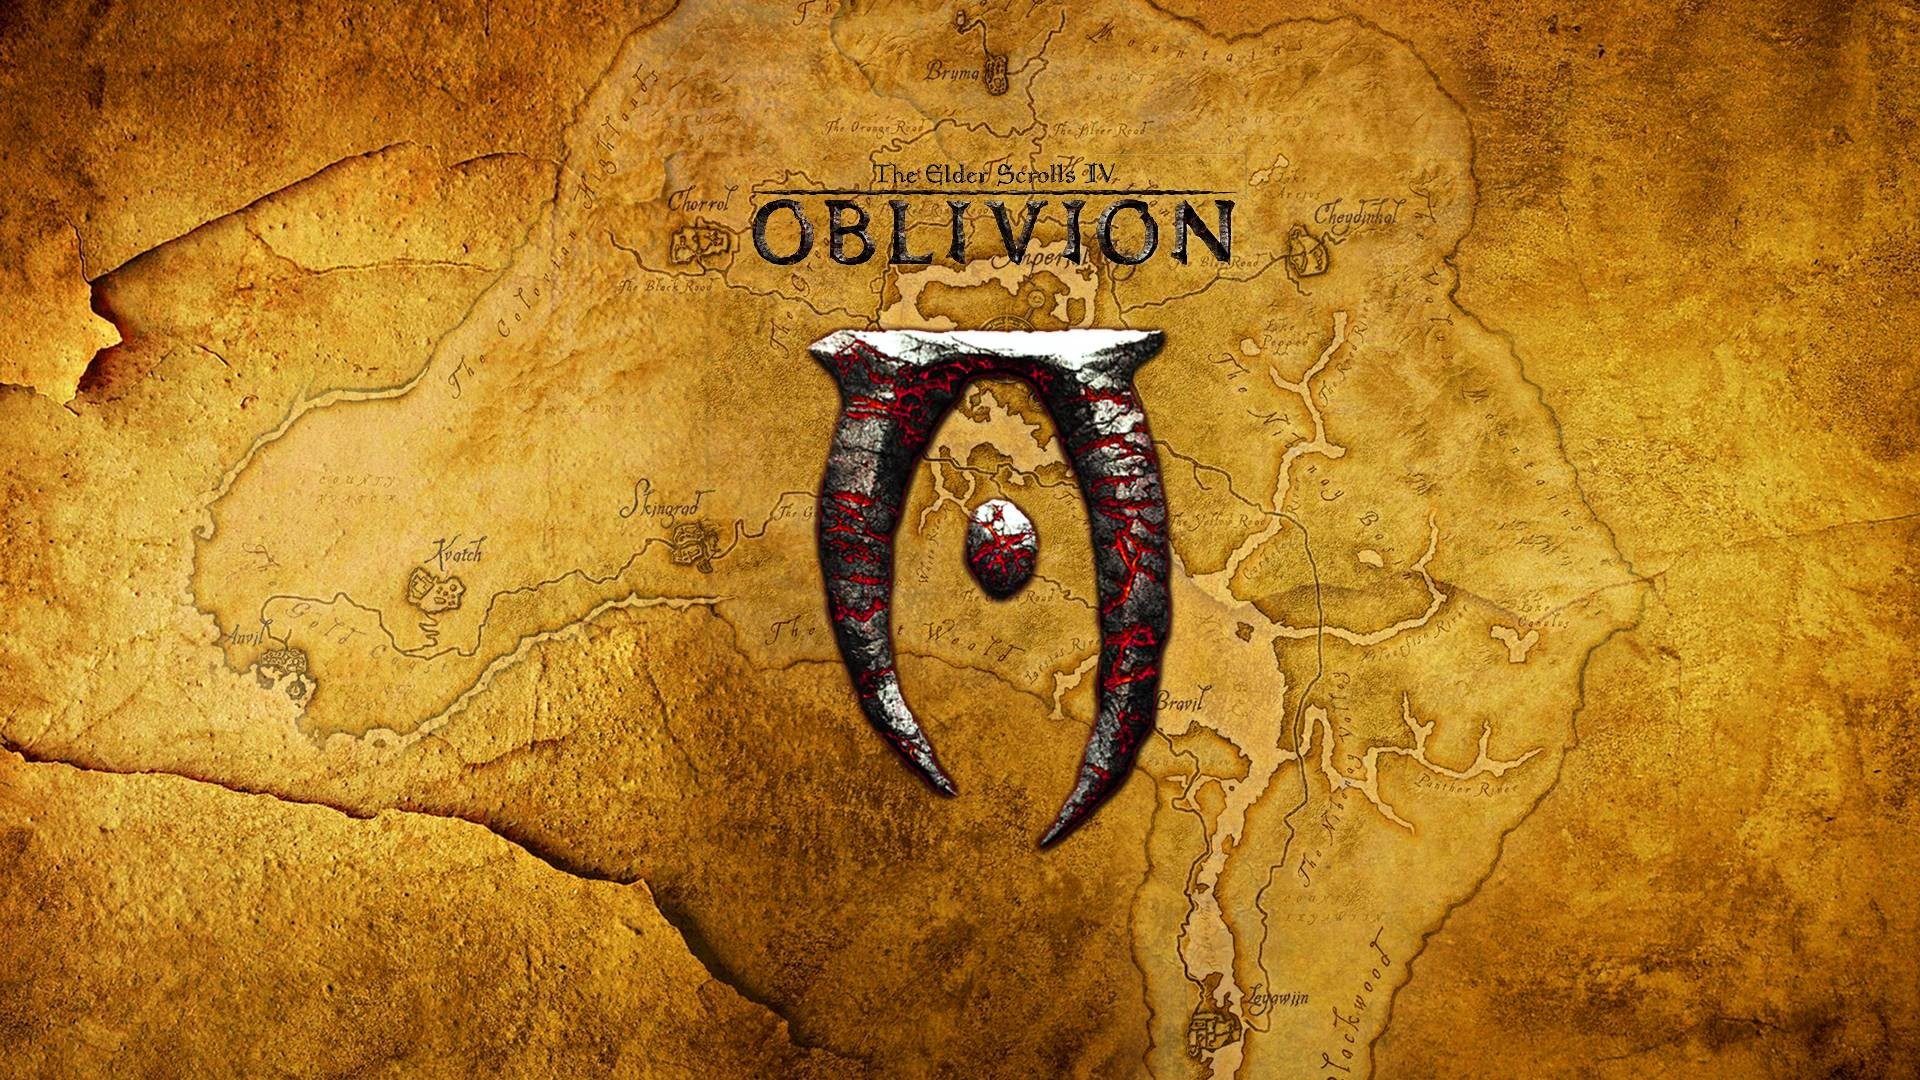 oblivion goty edition free